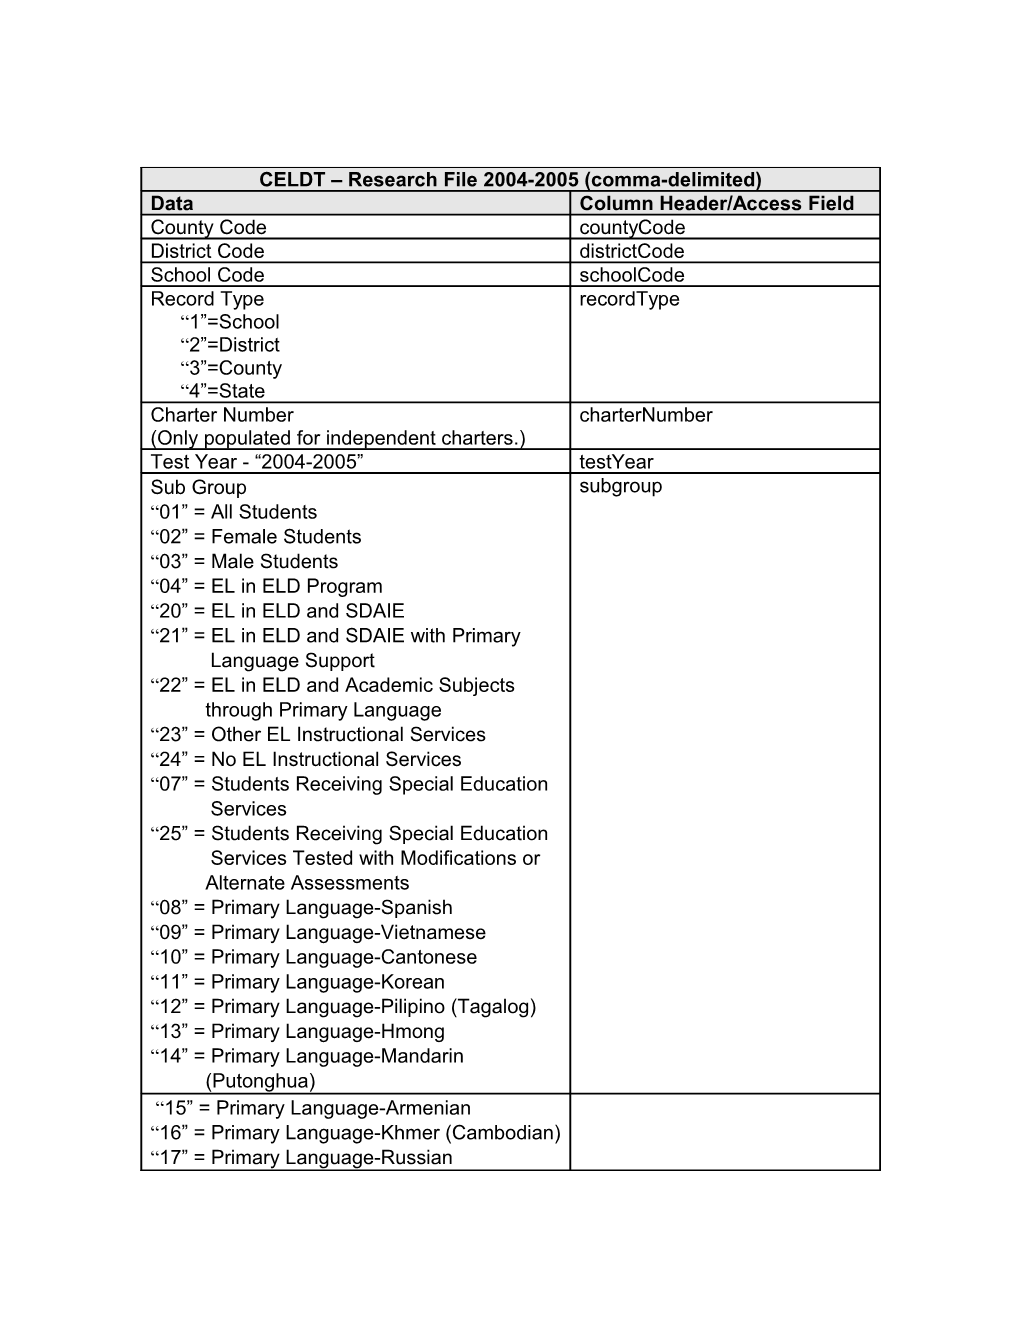 CELDT Research File 2004-2005 (Delimited) s1